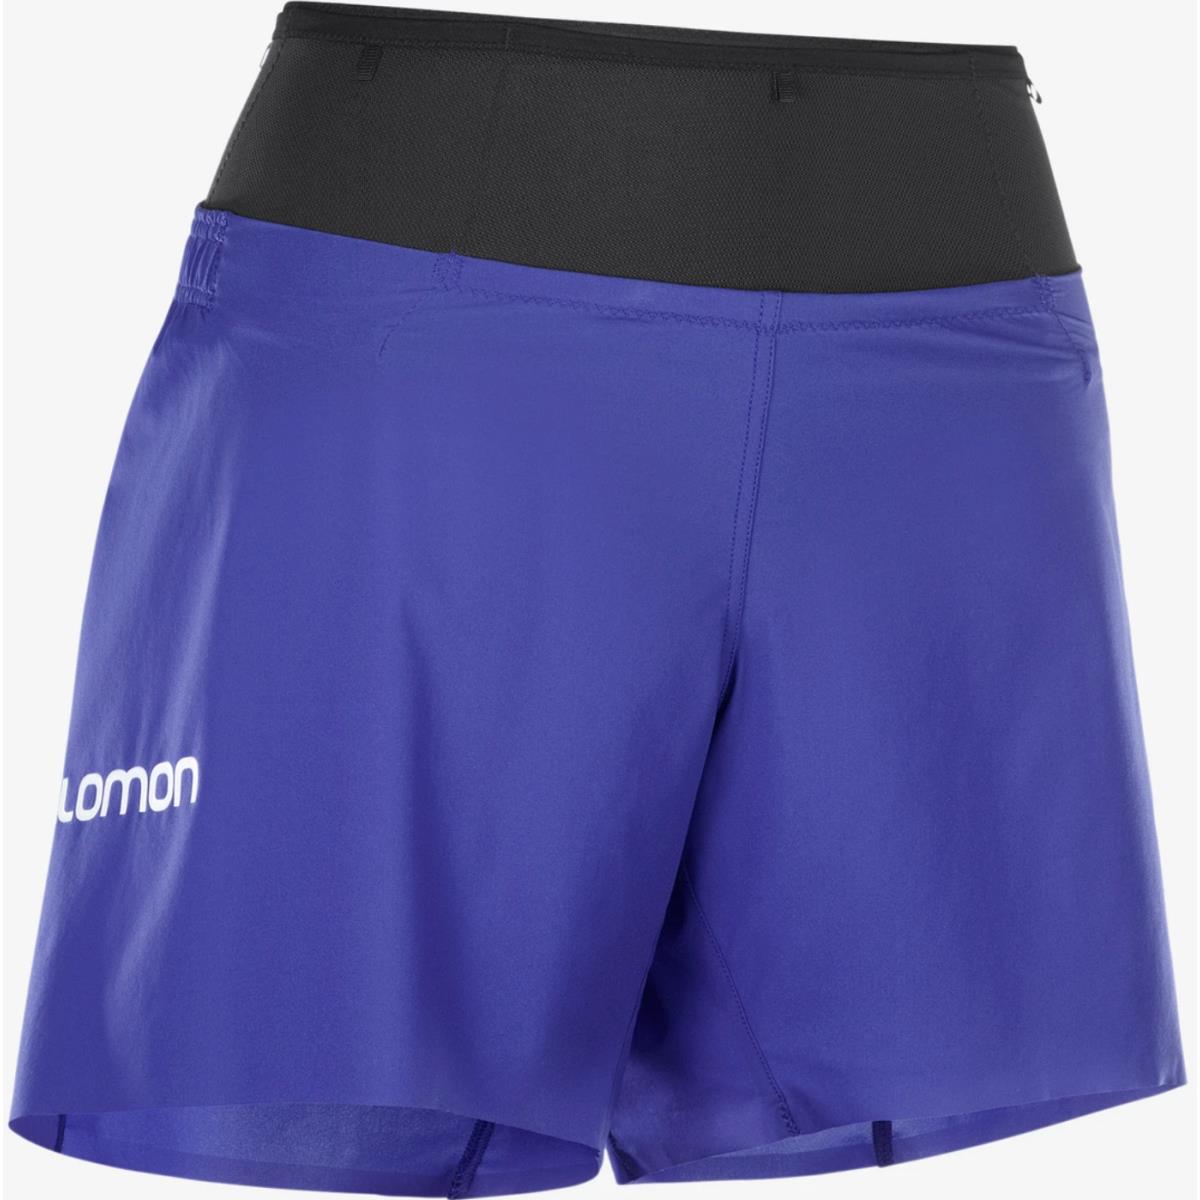 2021 Salomon Women`s S/lab Sense Running Shorts - Small